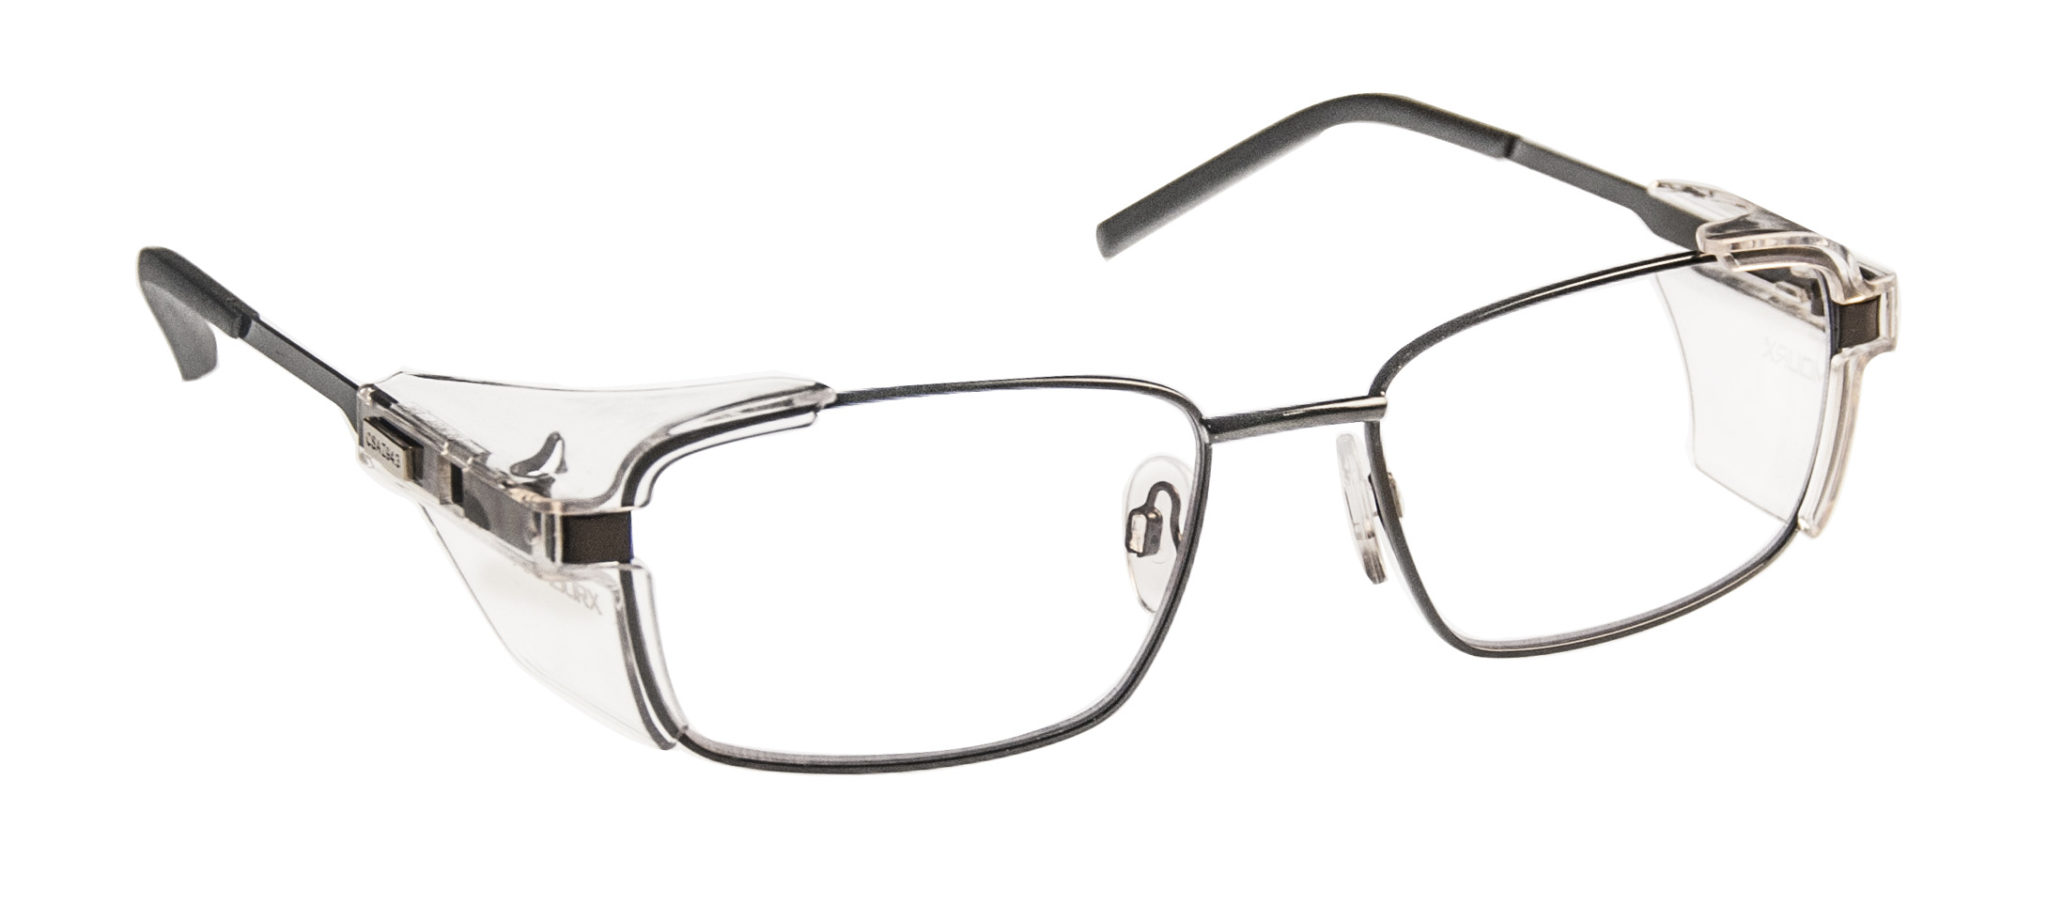 Armourx 3001P Black Eye Size 56 - Safety Glasses